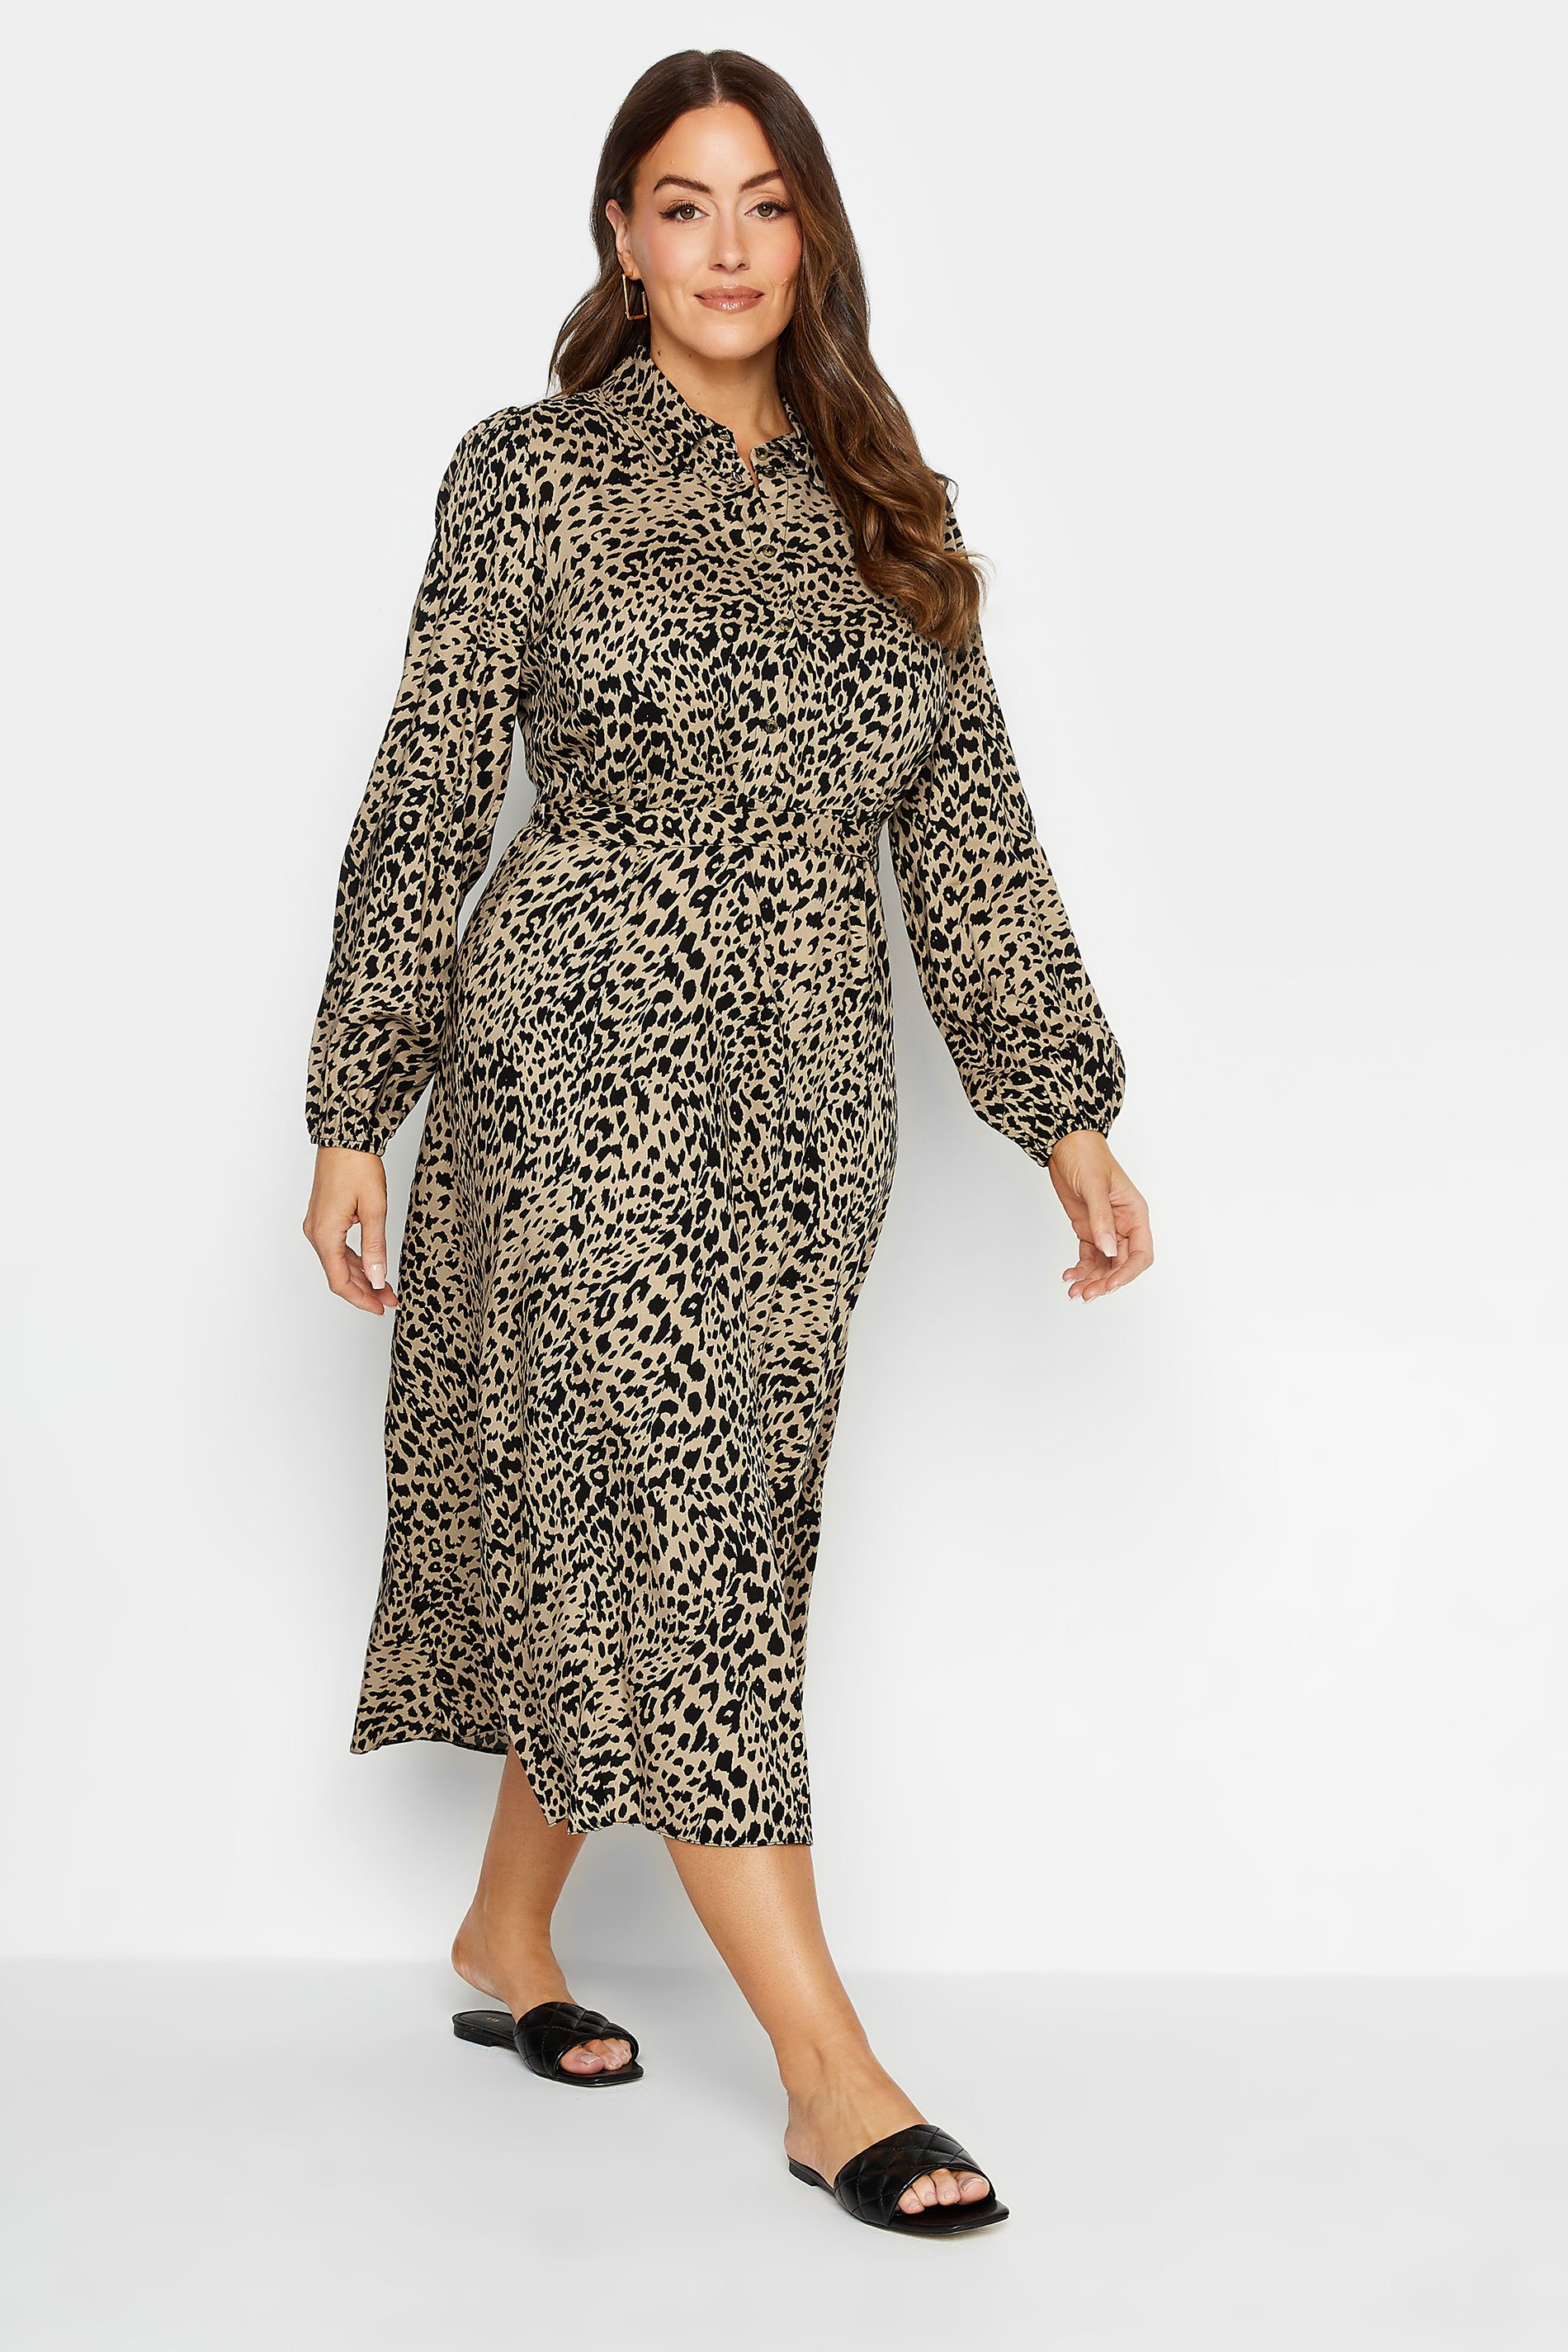 M&Co Brown Leopard Print Midaxi Shirt Dress | M&Co 1